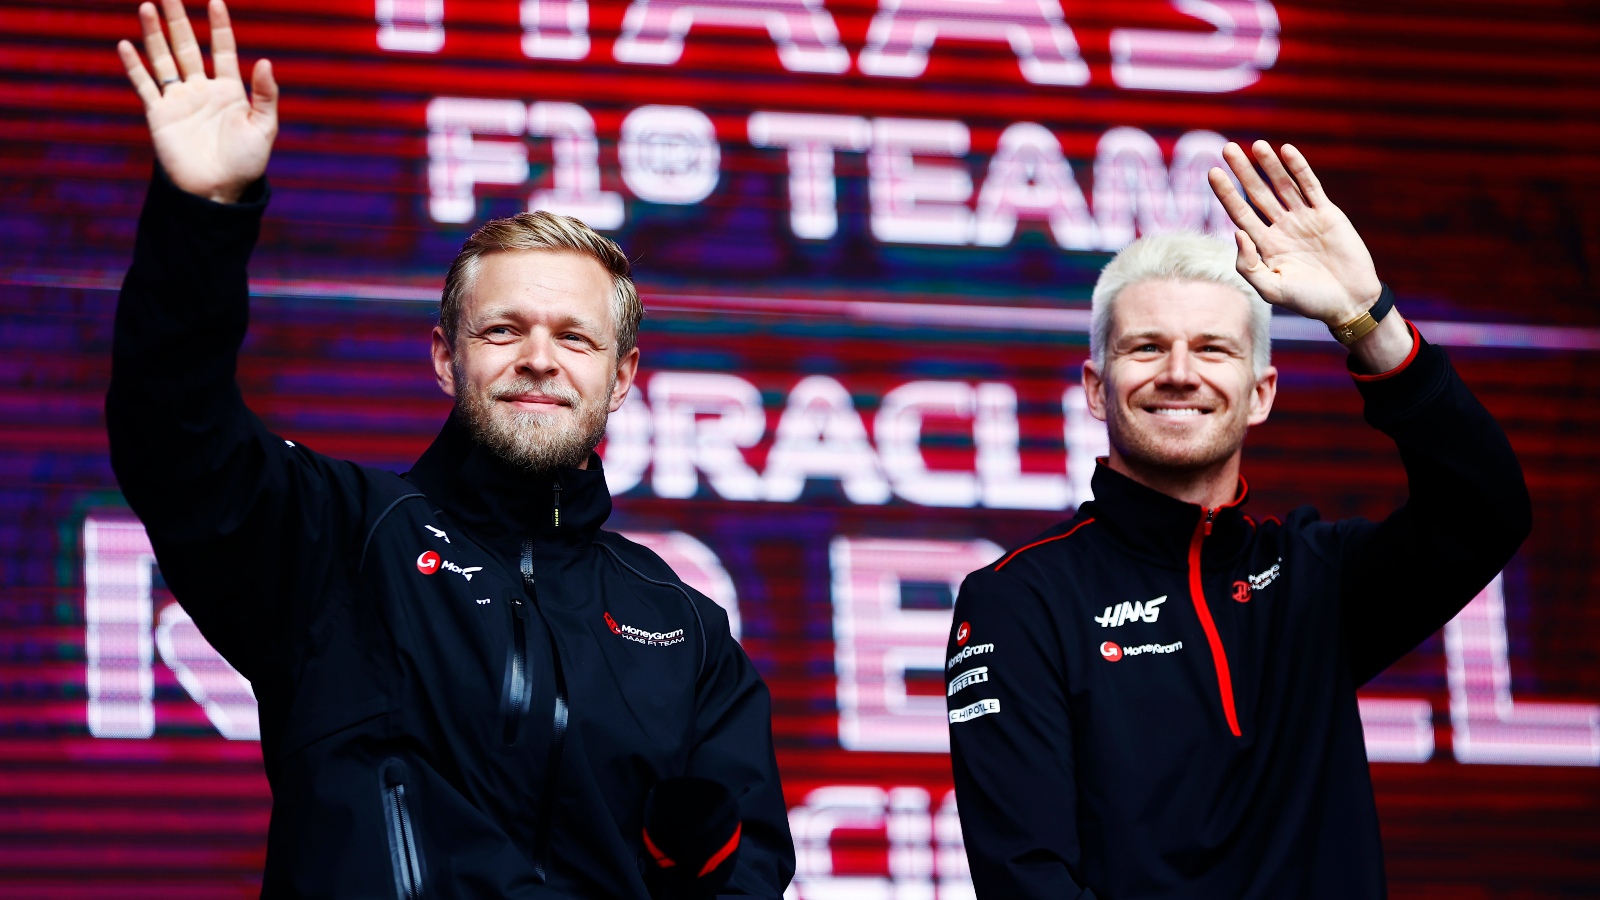 Haas' Kevin Magnussen and Nico Hülkenberg wave